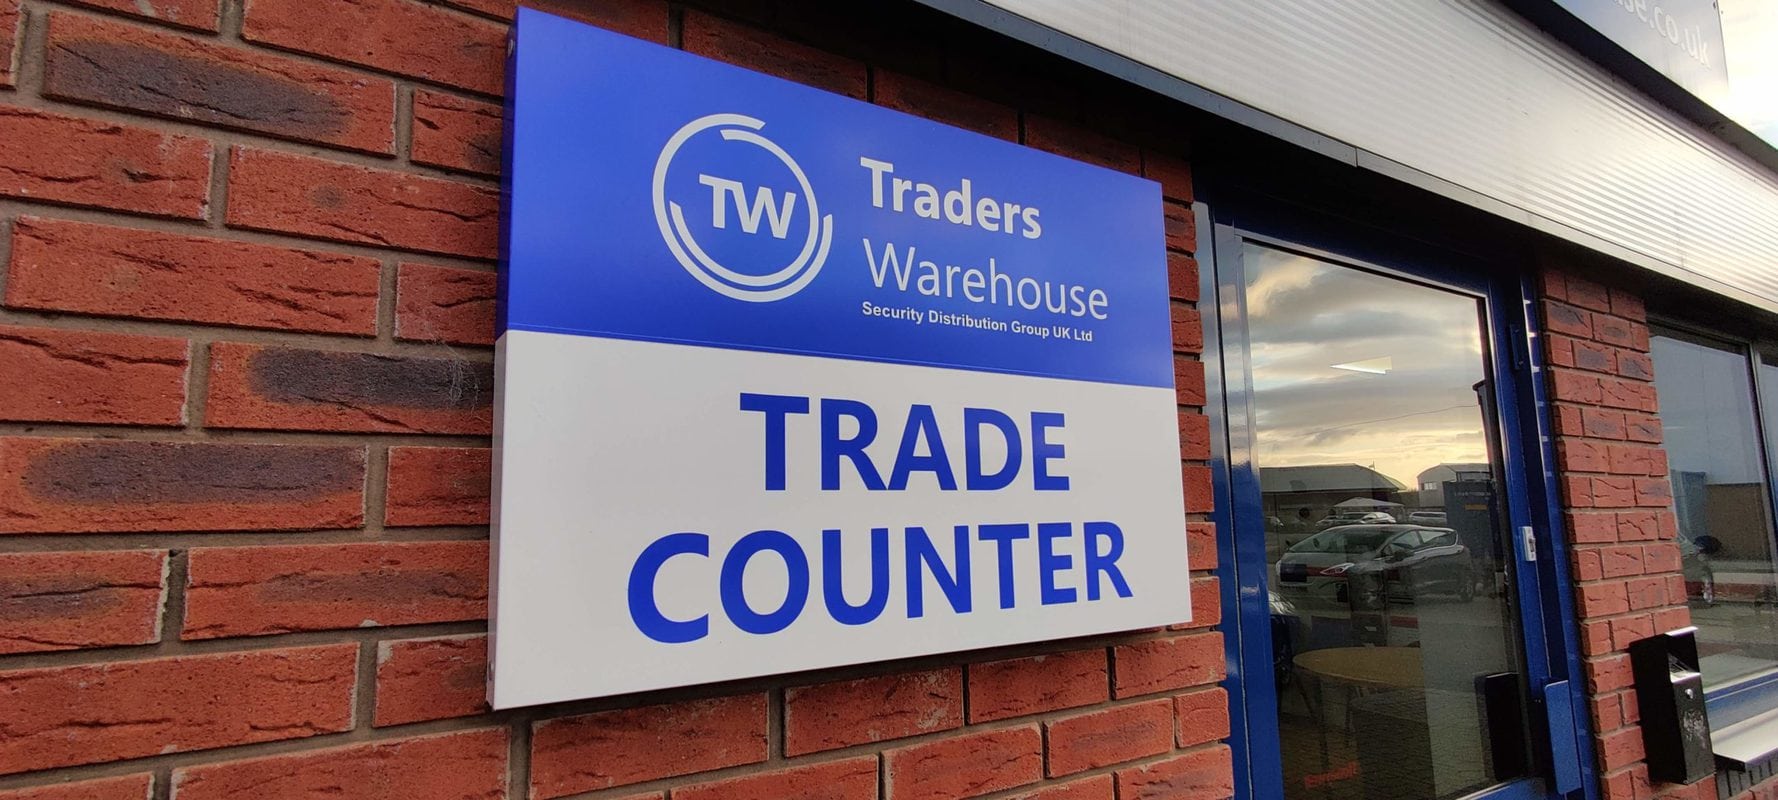 Traders Warehouse trade counter